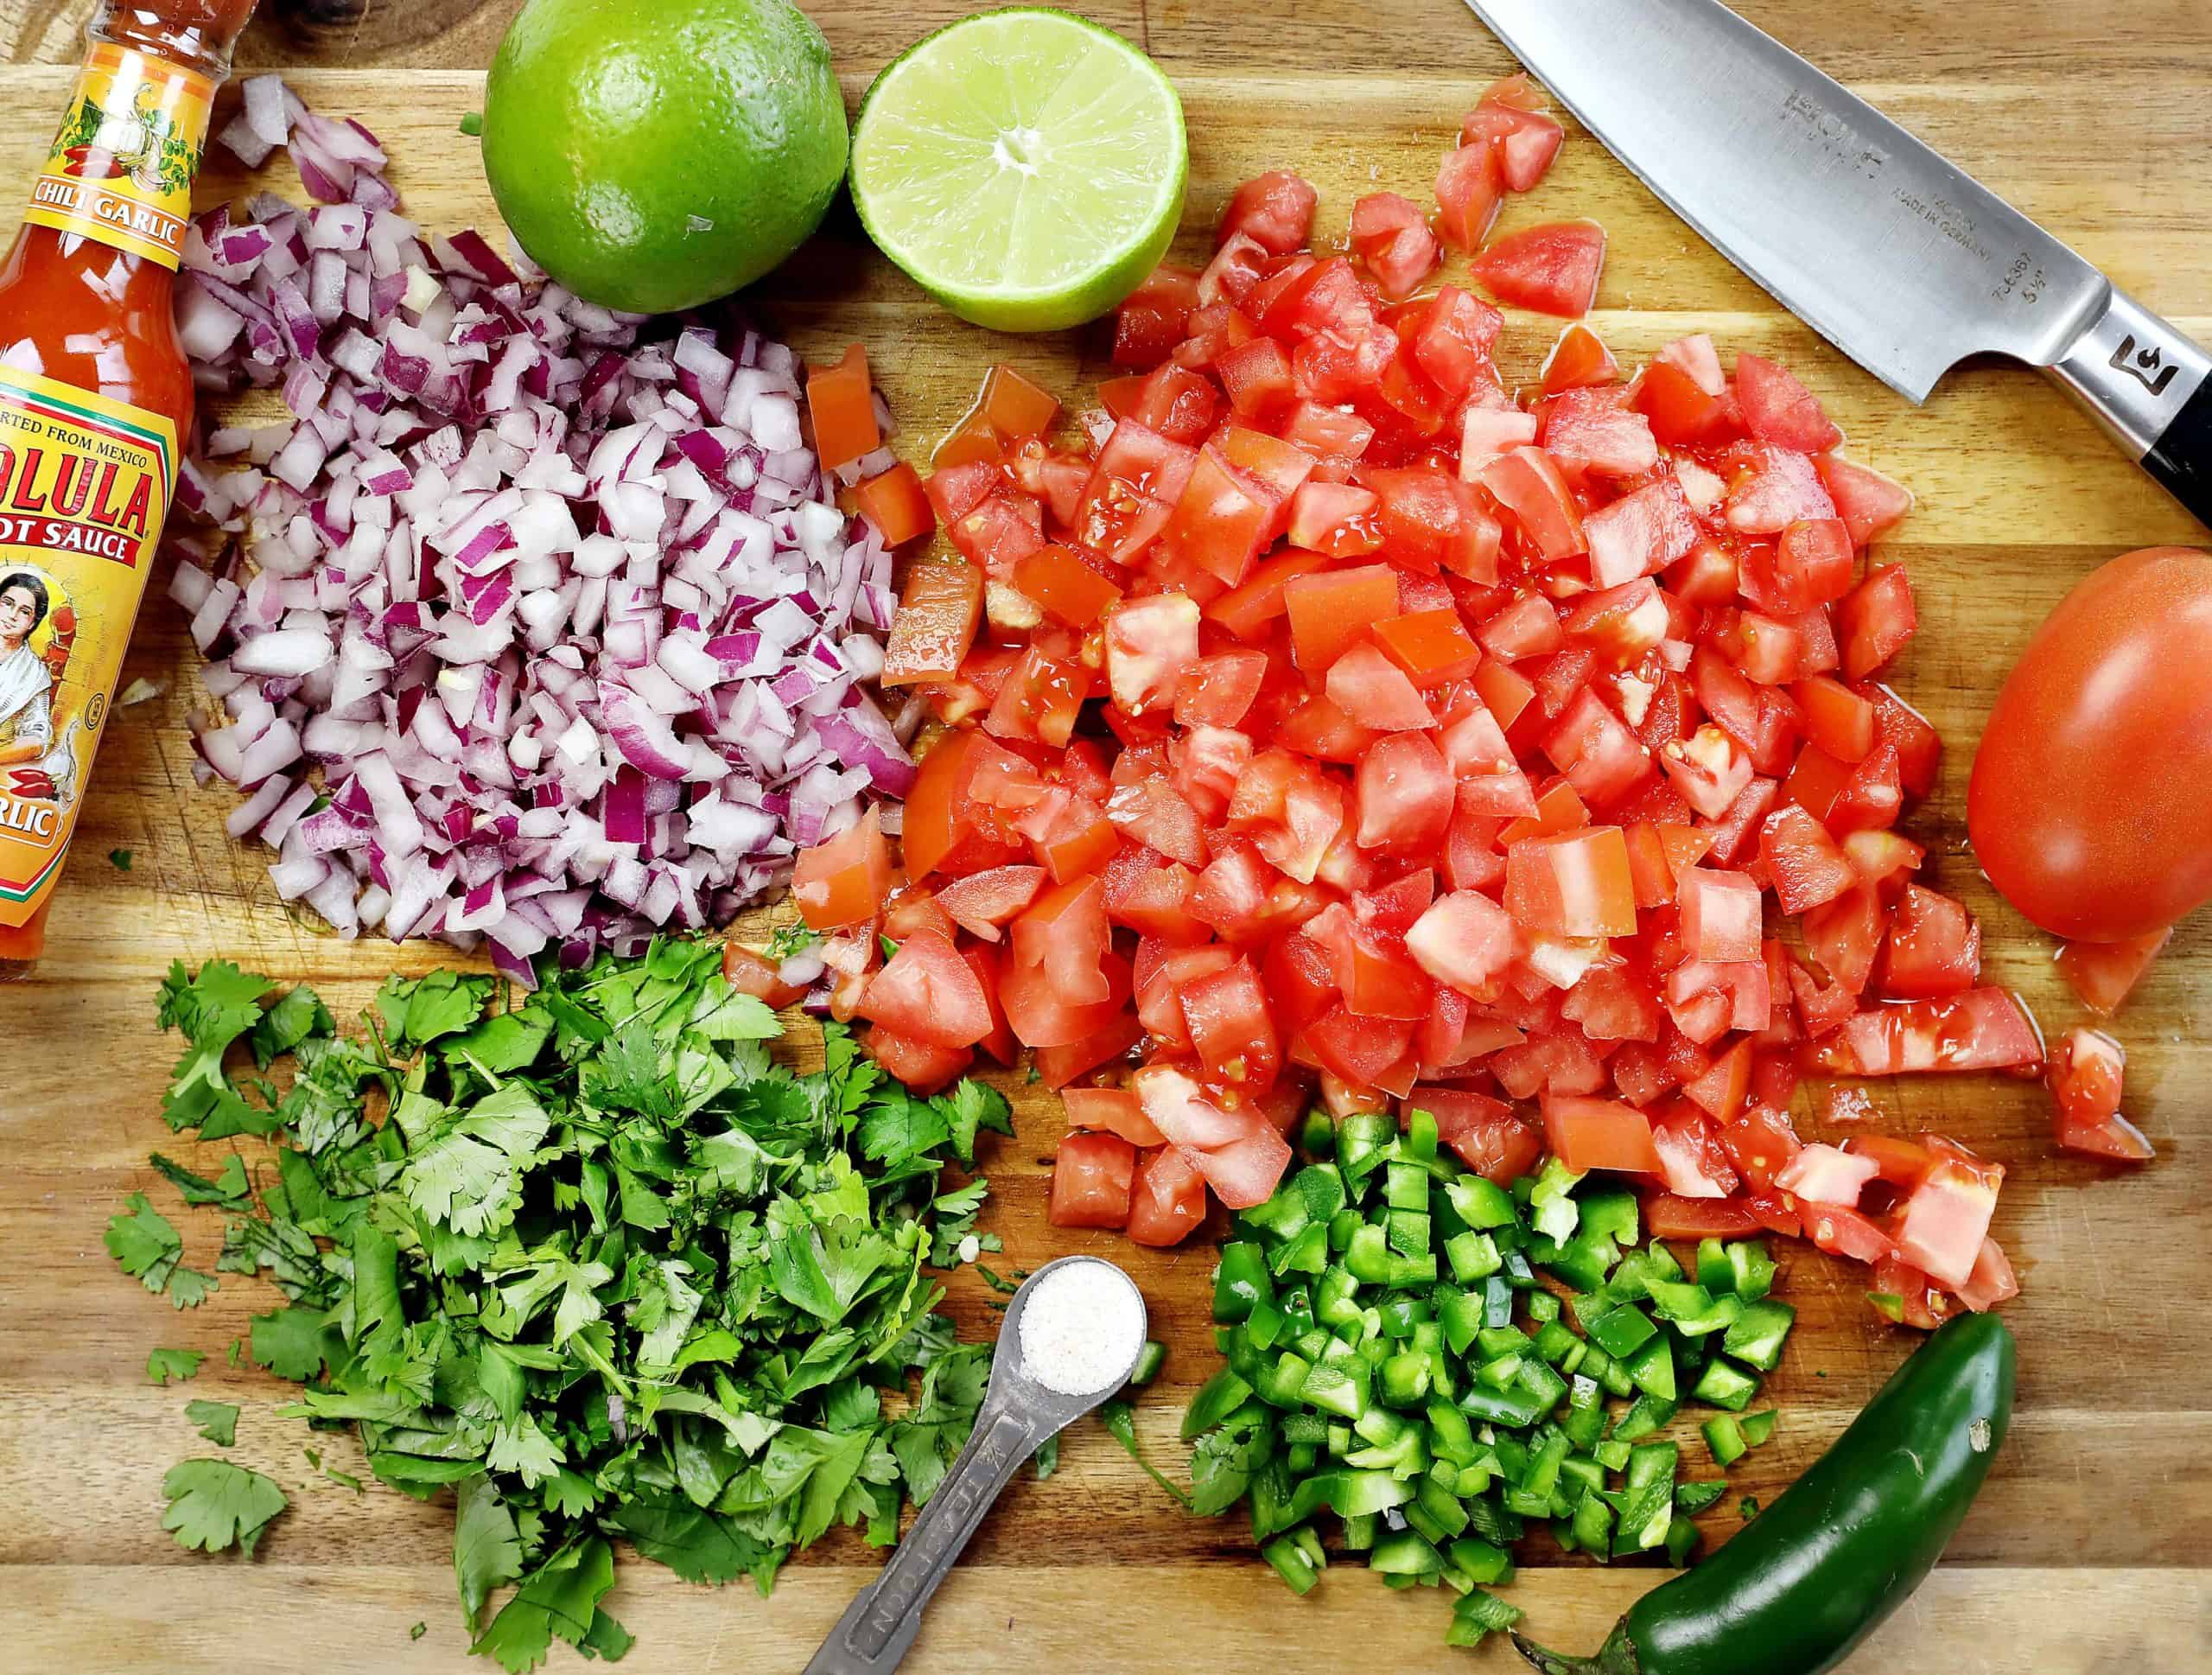 Ingredients for Baja Fish Tacos